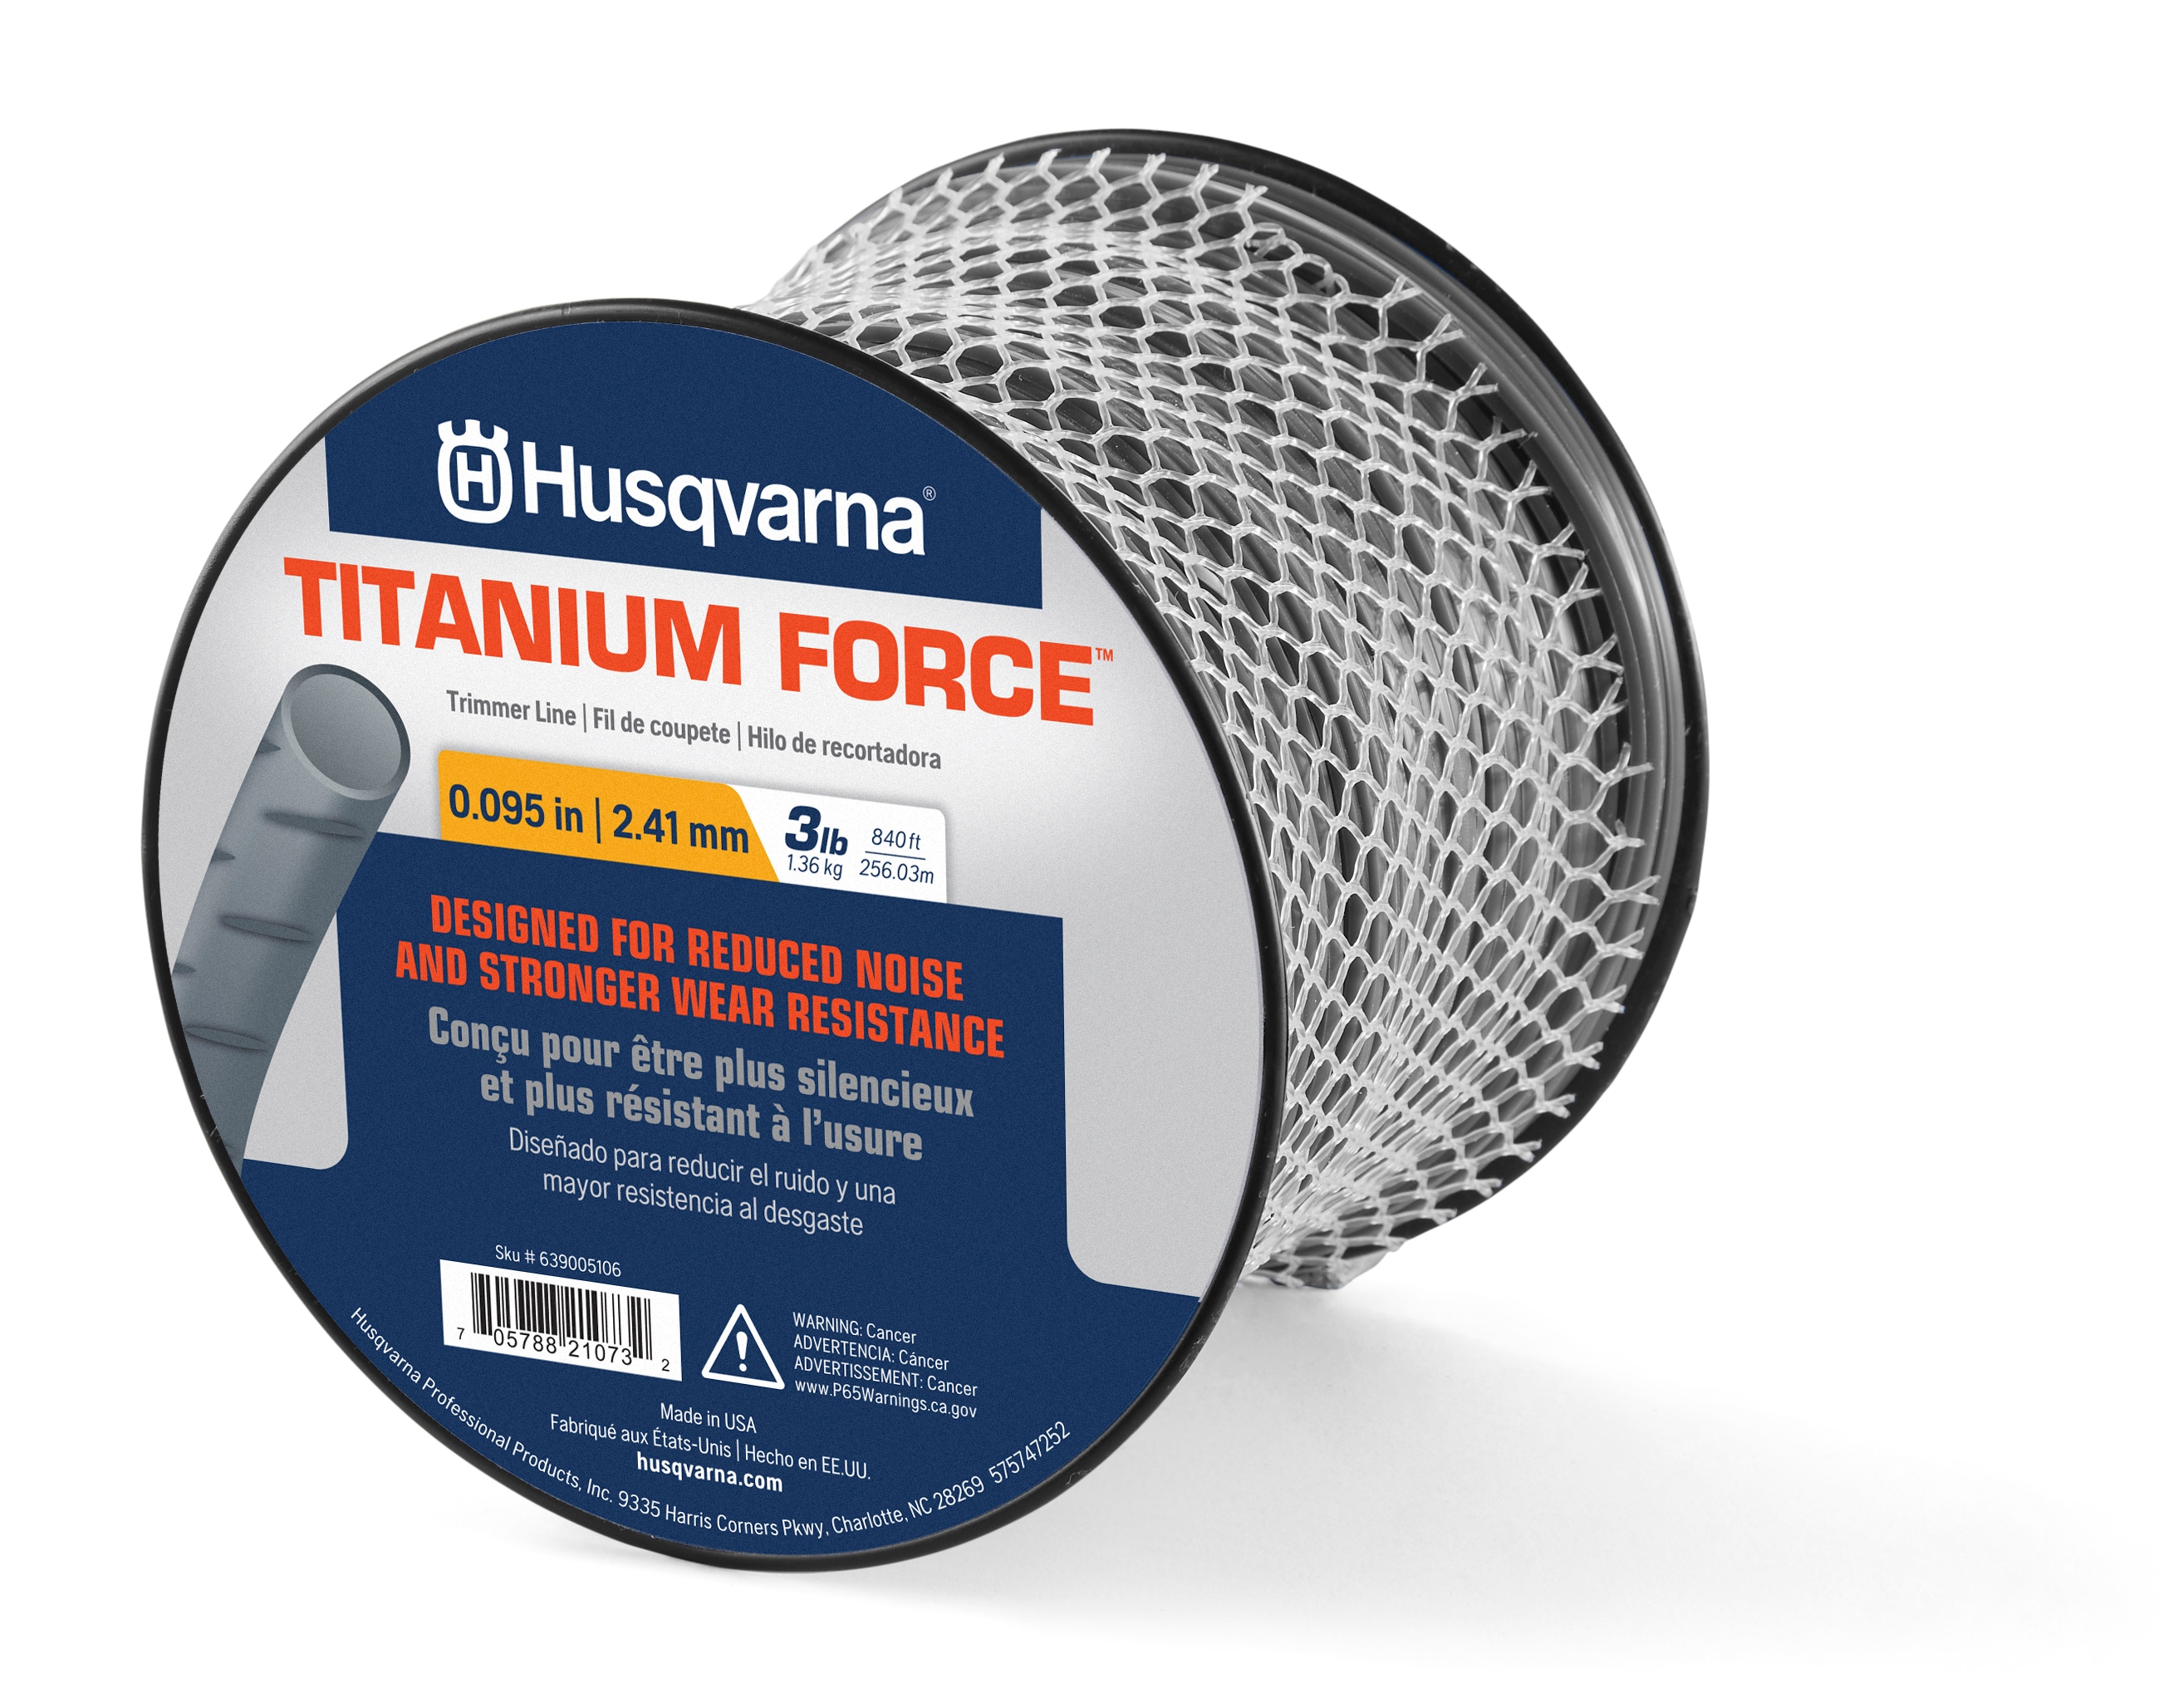 Husqvarna Titanium Force 0.095-in x 840-ft Spooled Trimmer Line in 